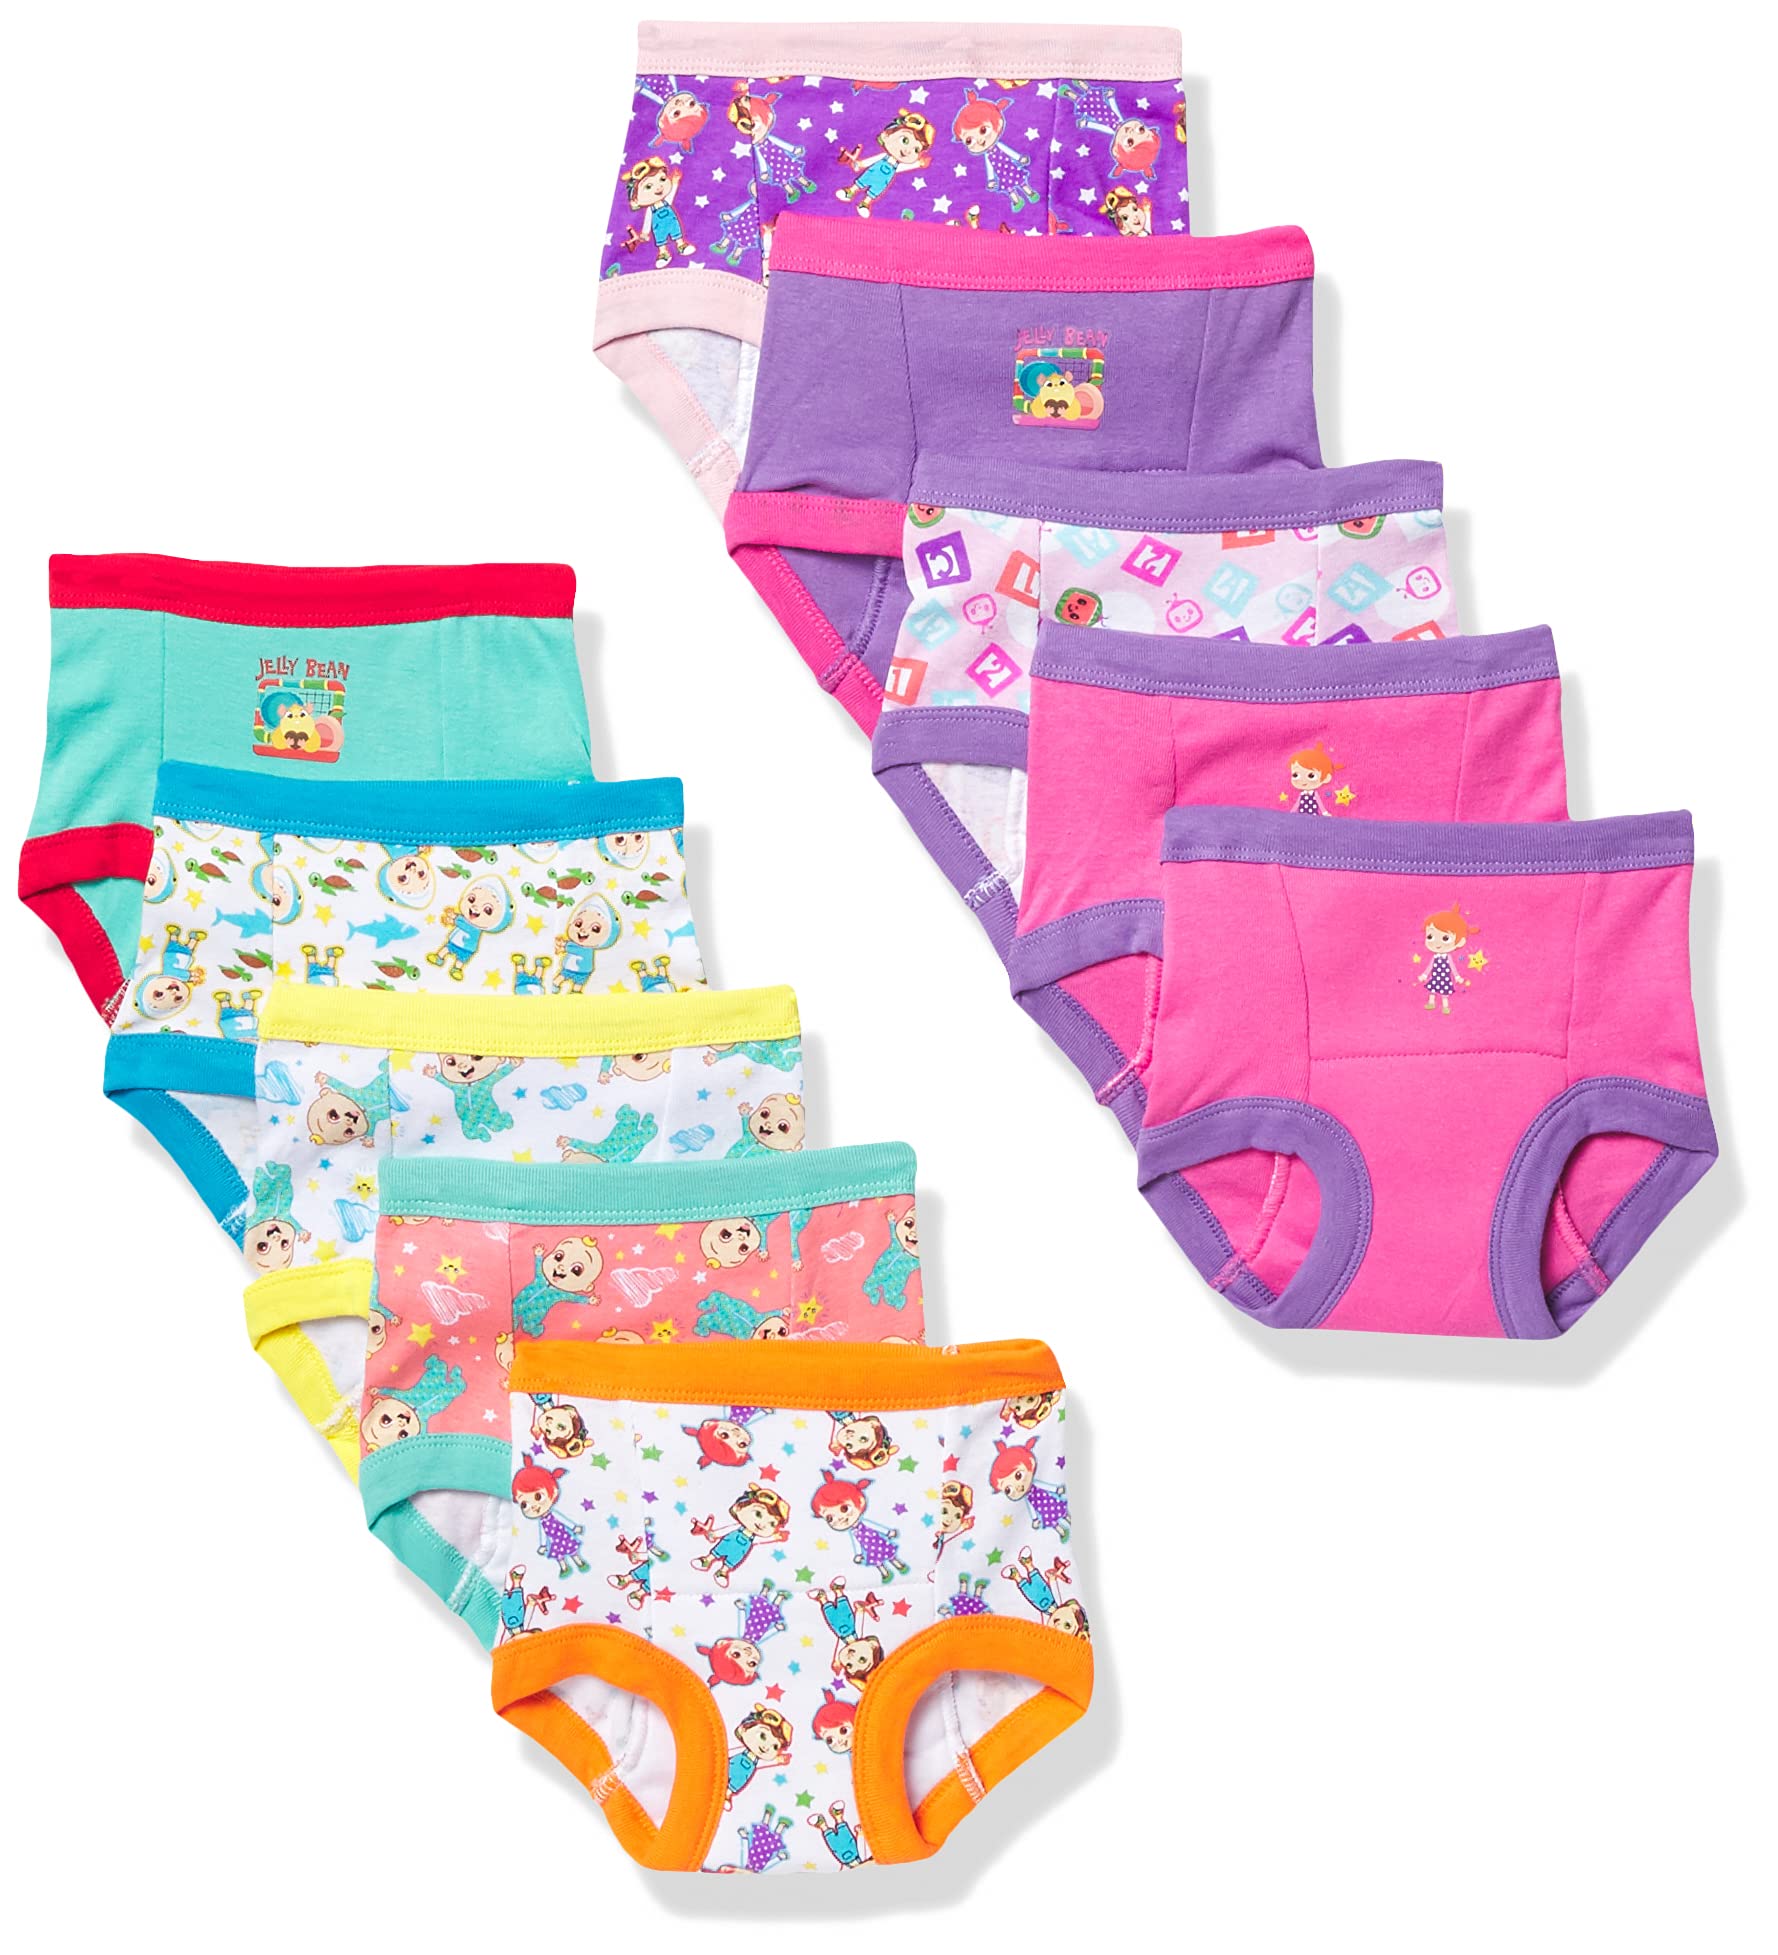  Coco Melon 7-Pack Girls Training Pants Underwear 100% Cotton  Fun Potty Training (3T) : Baby